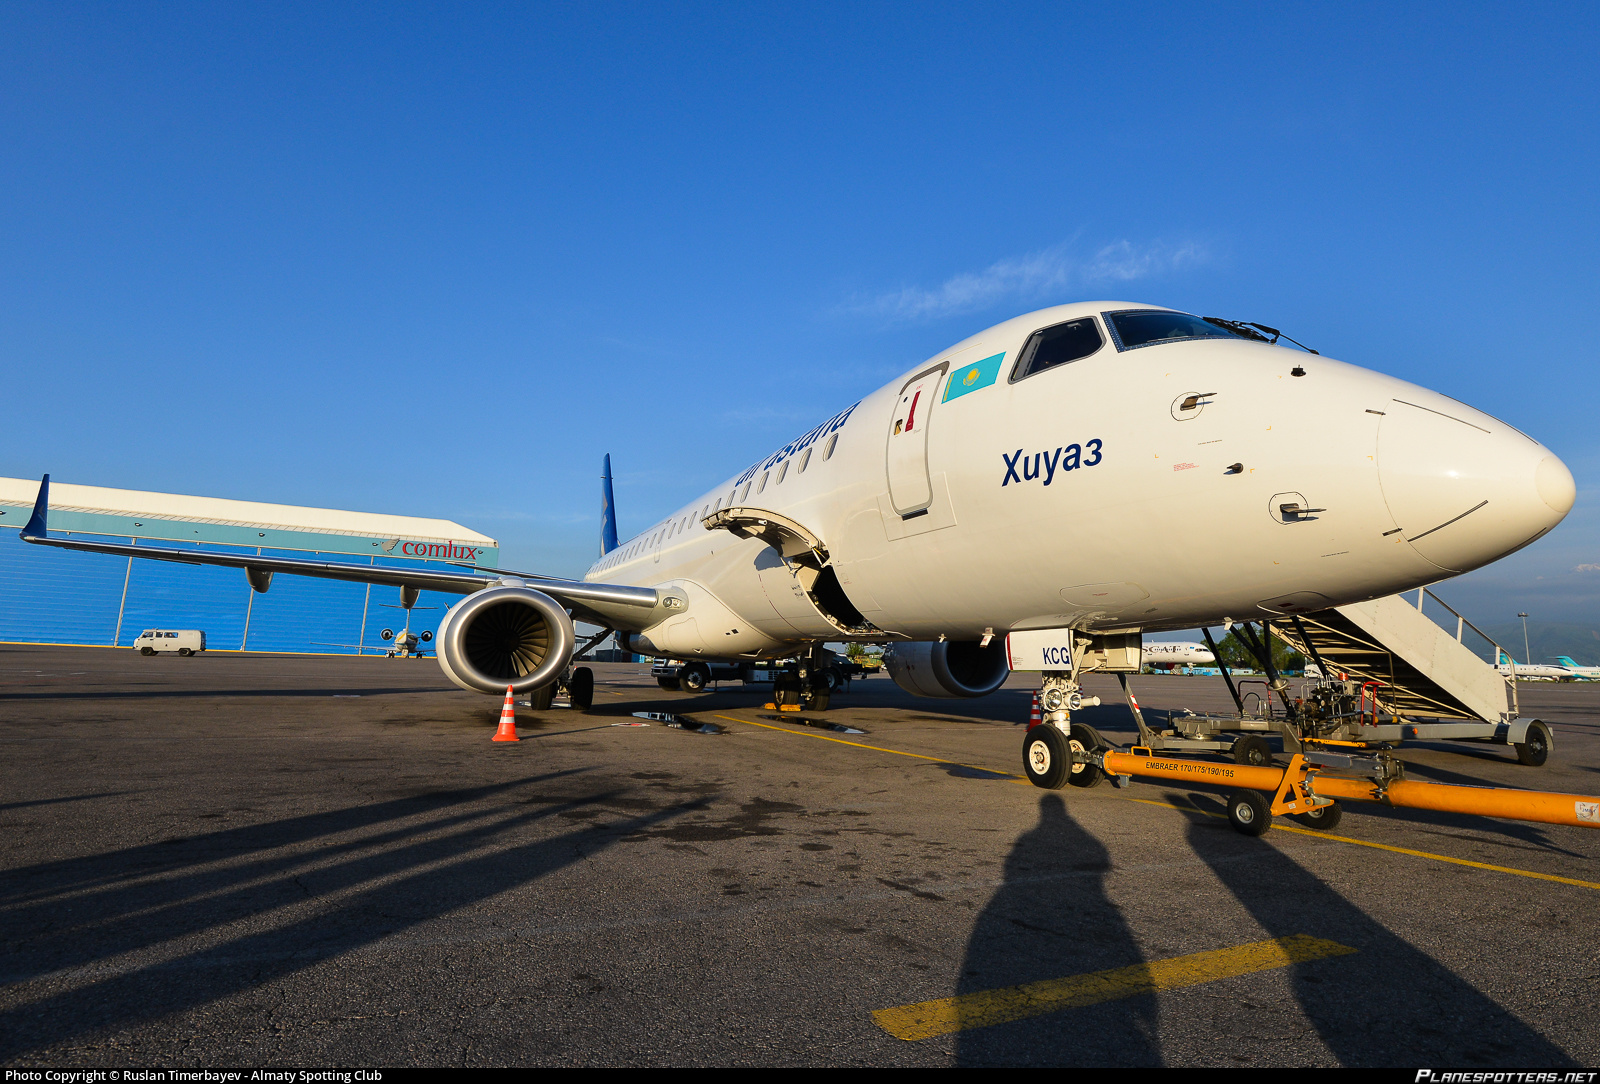 Питер Форстер Air Astana. Казань астана самолет